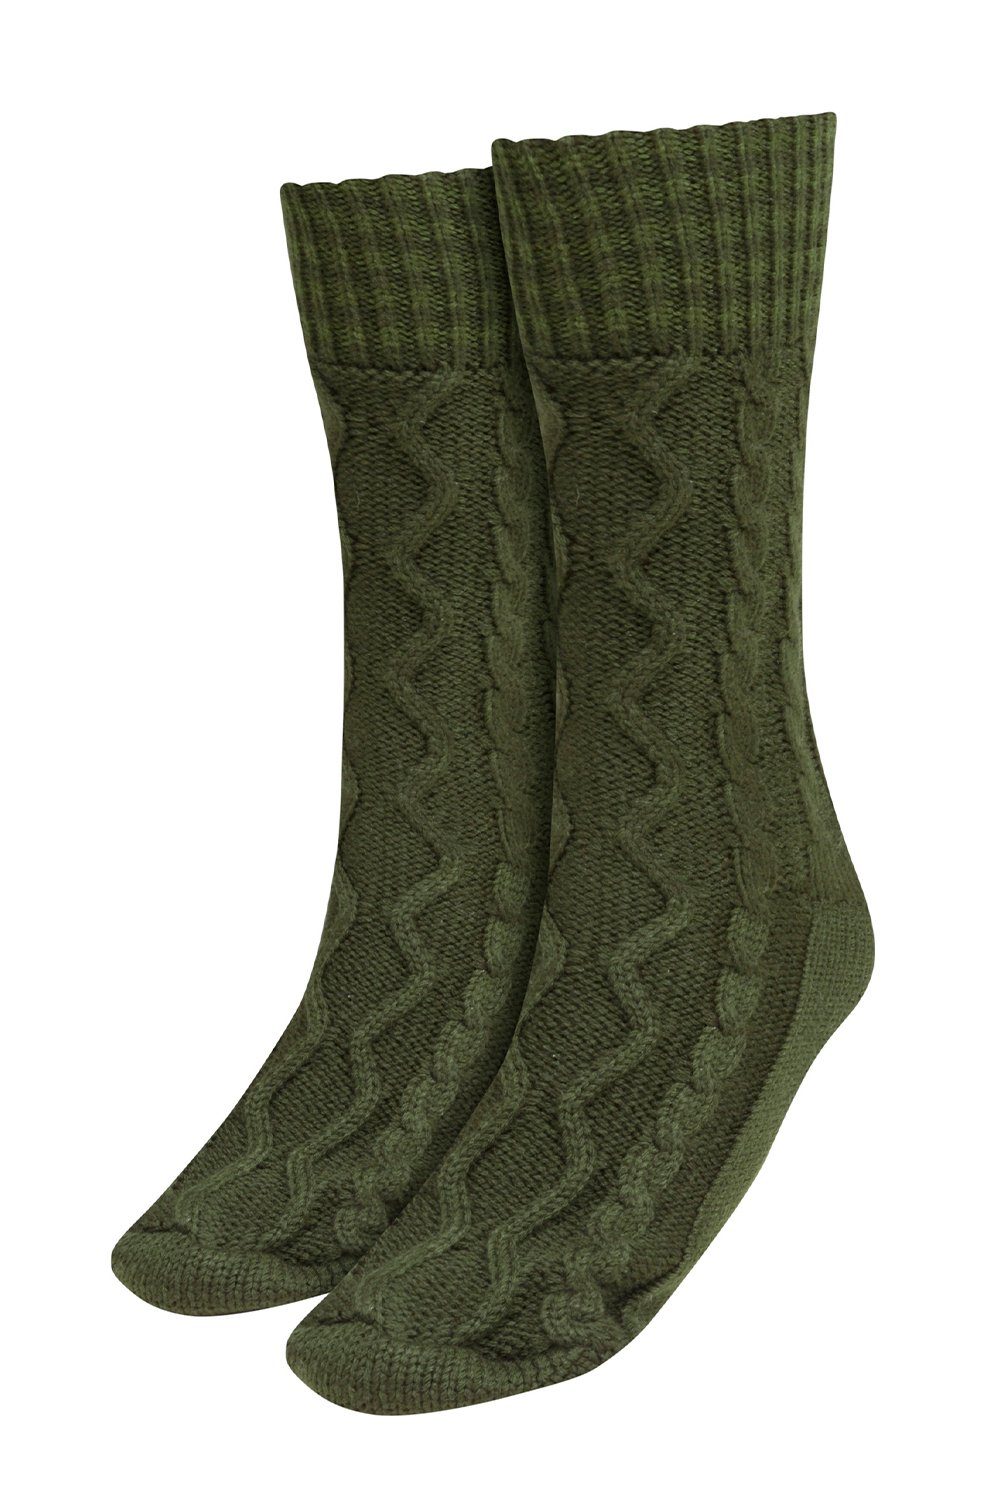 PiP Studio Socken Annika Long Socks 51519005-008 dark green